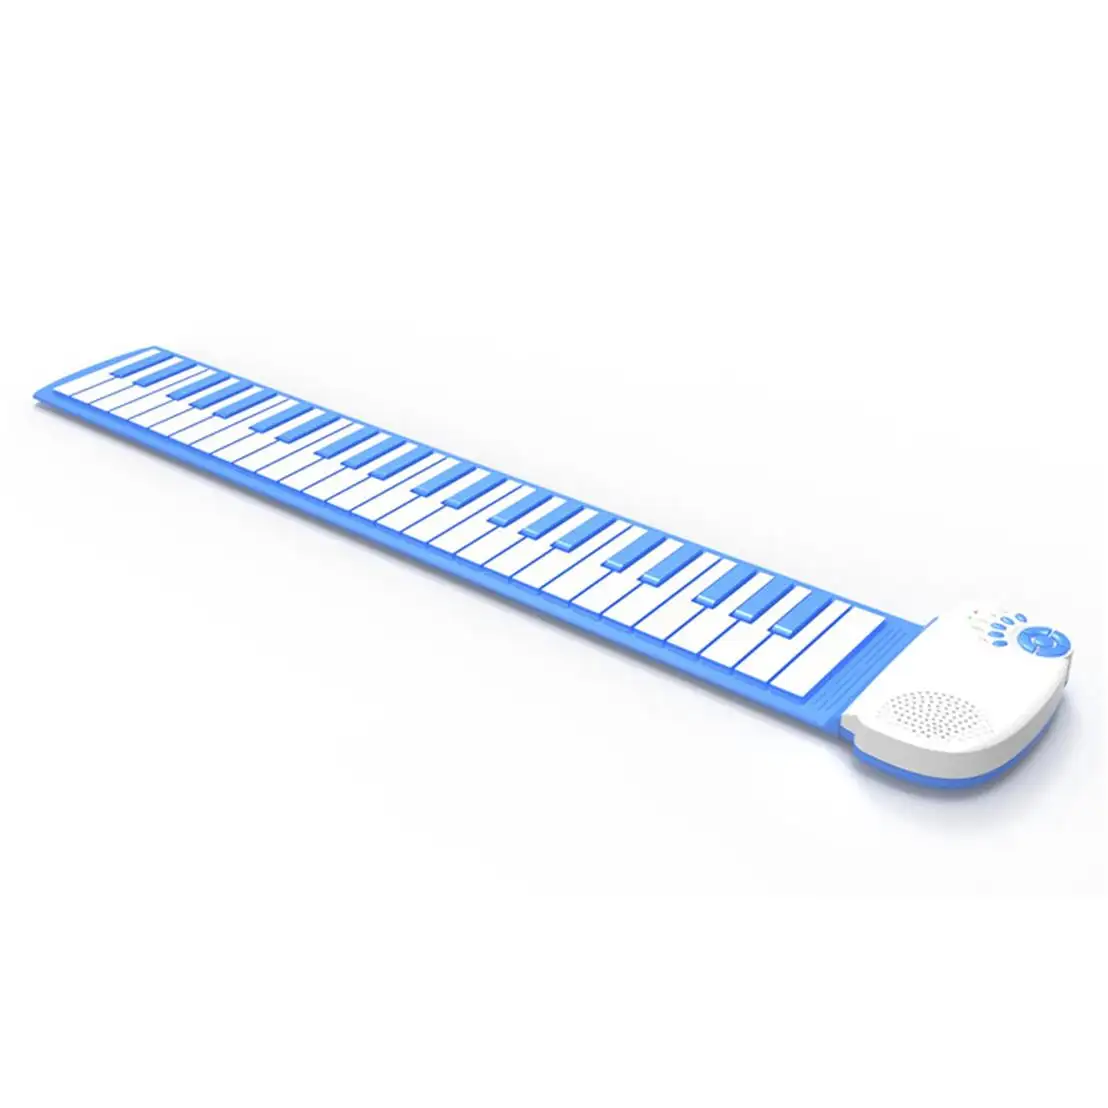 2022 Hadiah Promosi Midi Keyboard Lipat Digital Roll Up Kawai Piano 49 Tuts dengan Speaker Built-In